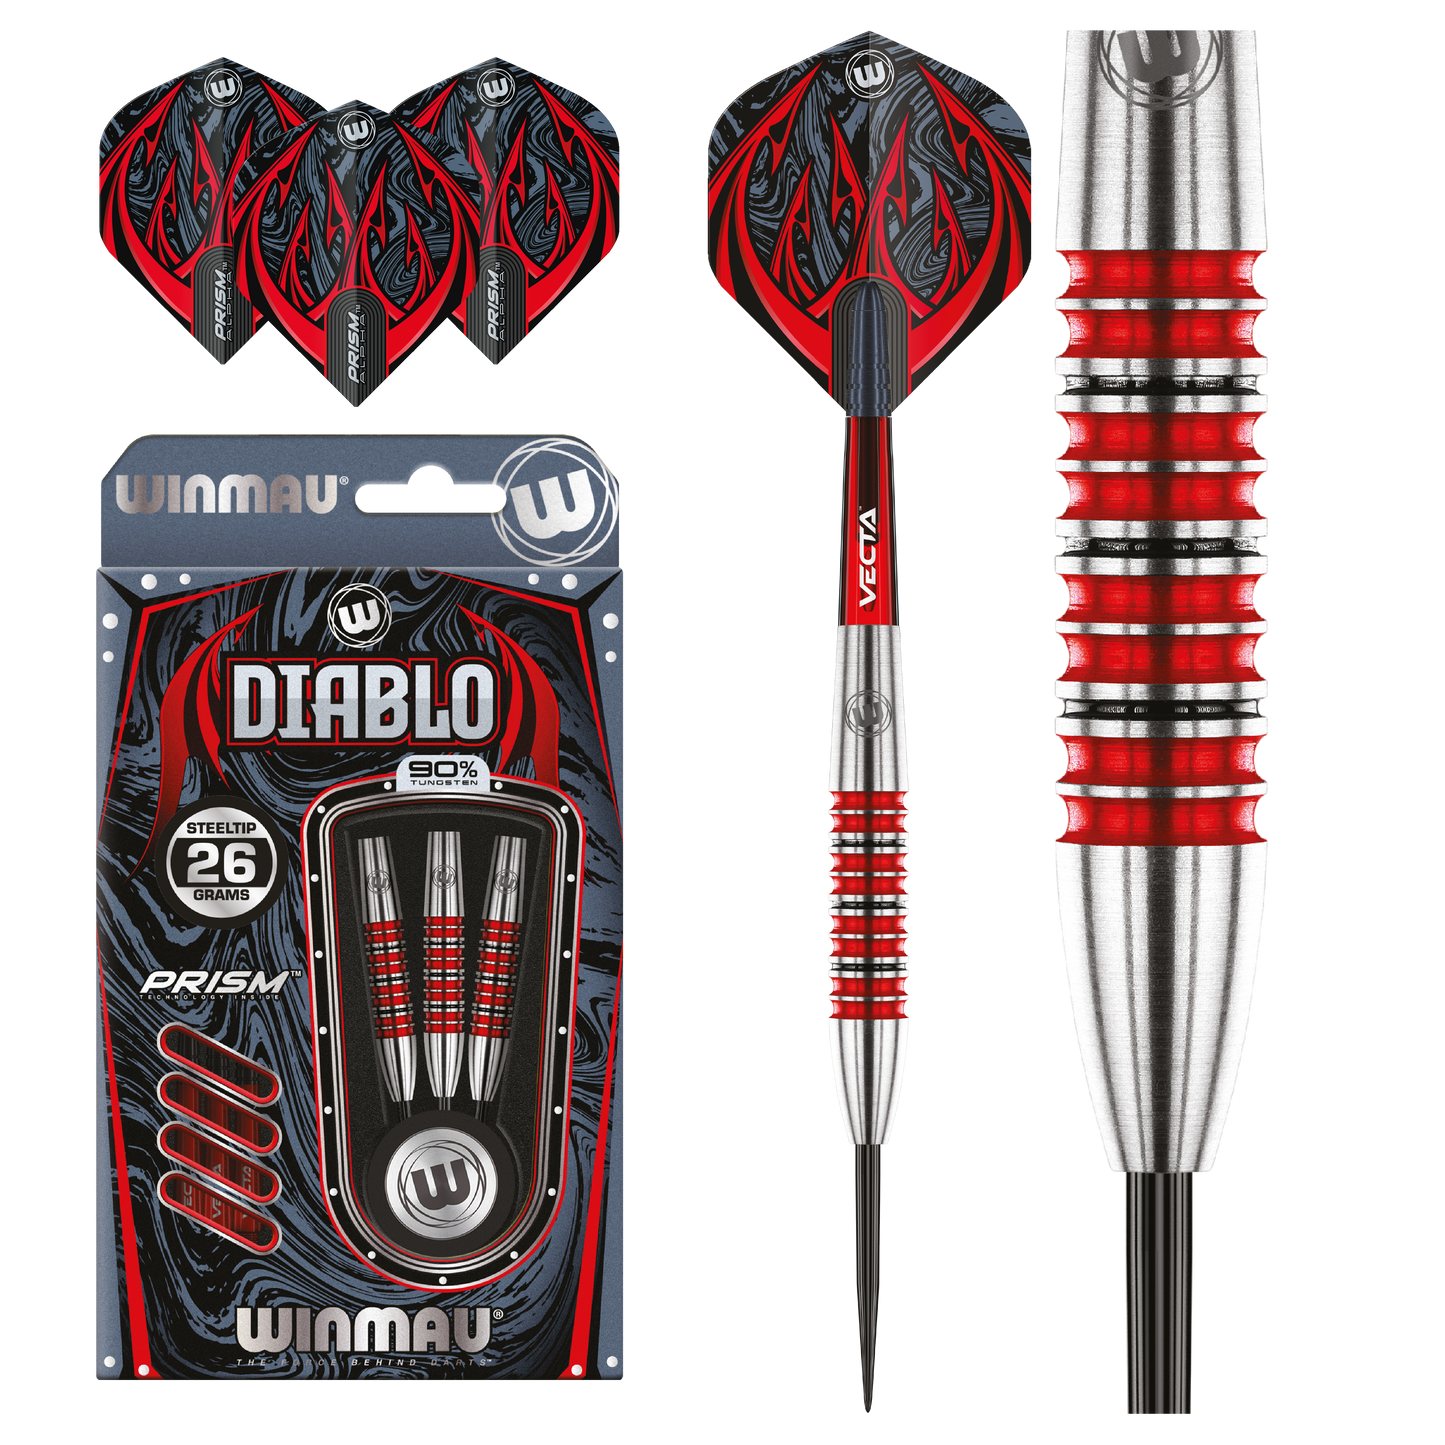 Winmau Diablo Torpedo 90% Tungsten Alloy Dart 26g